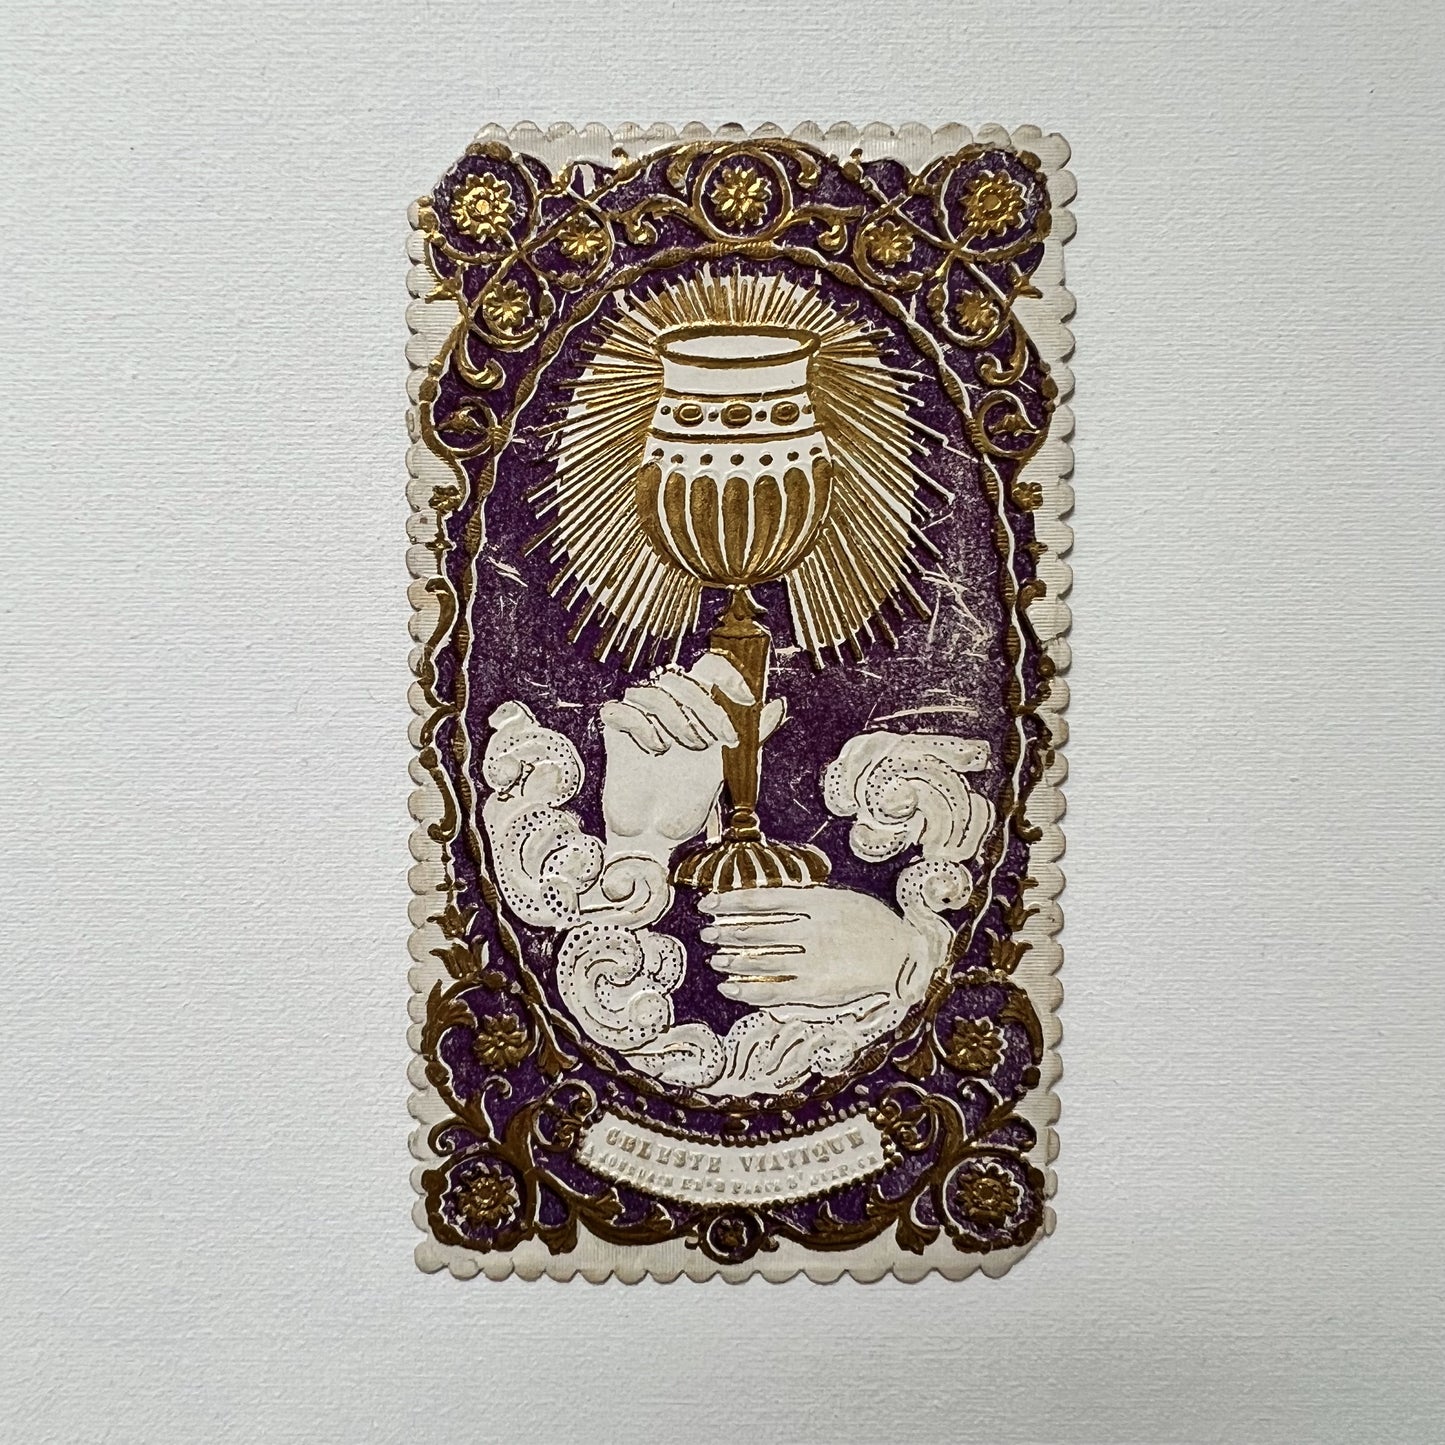 【Antique】France - 1900s Holy Card “CELESTE VIATIQUE”